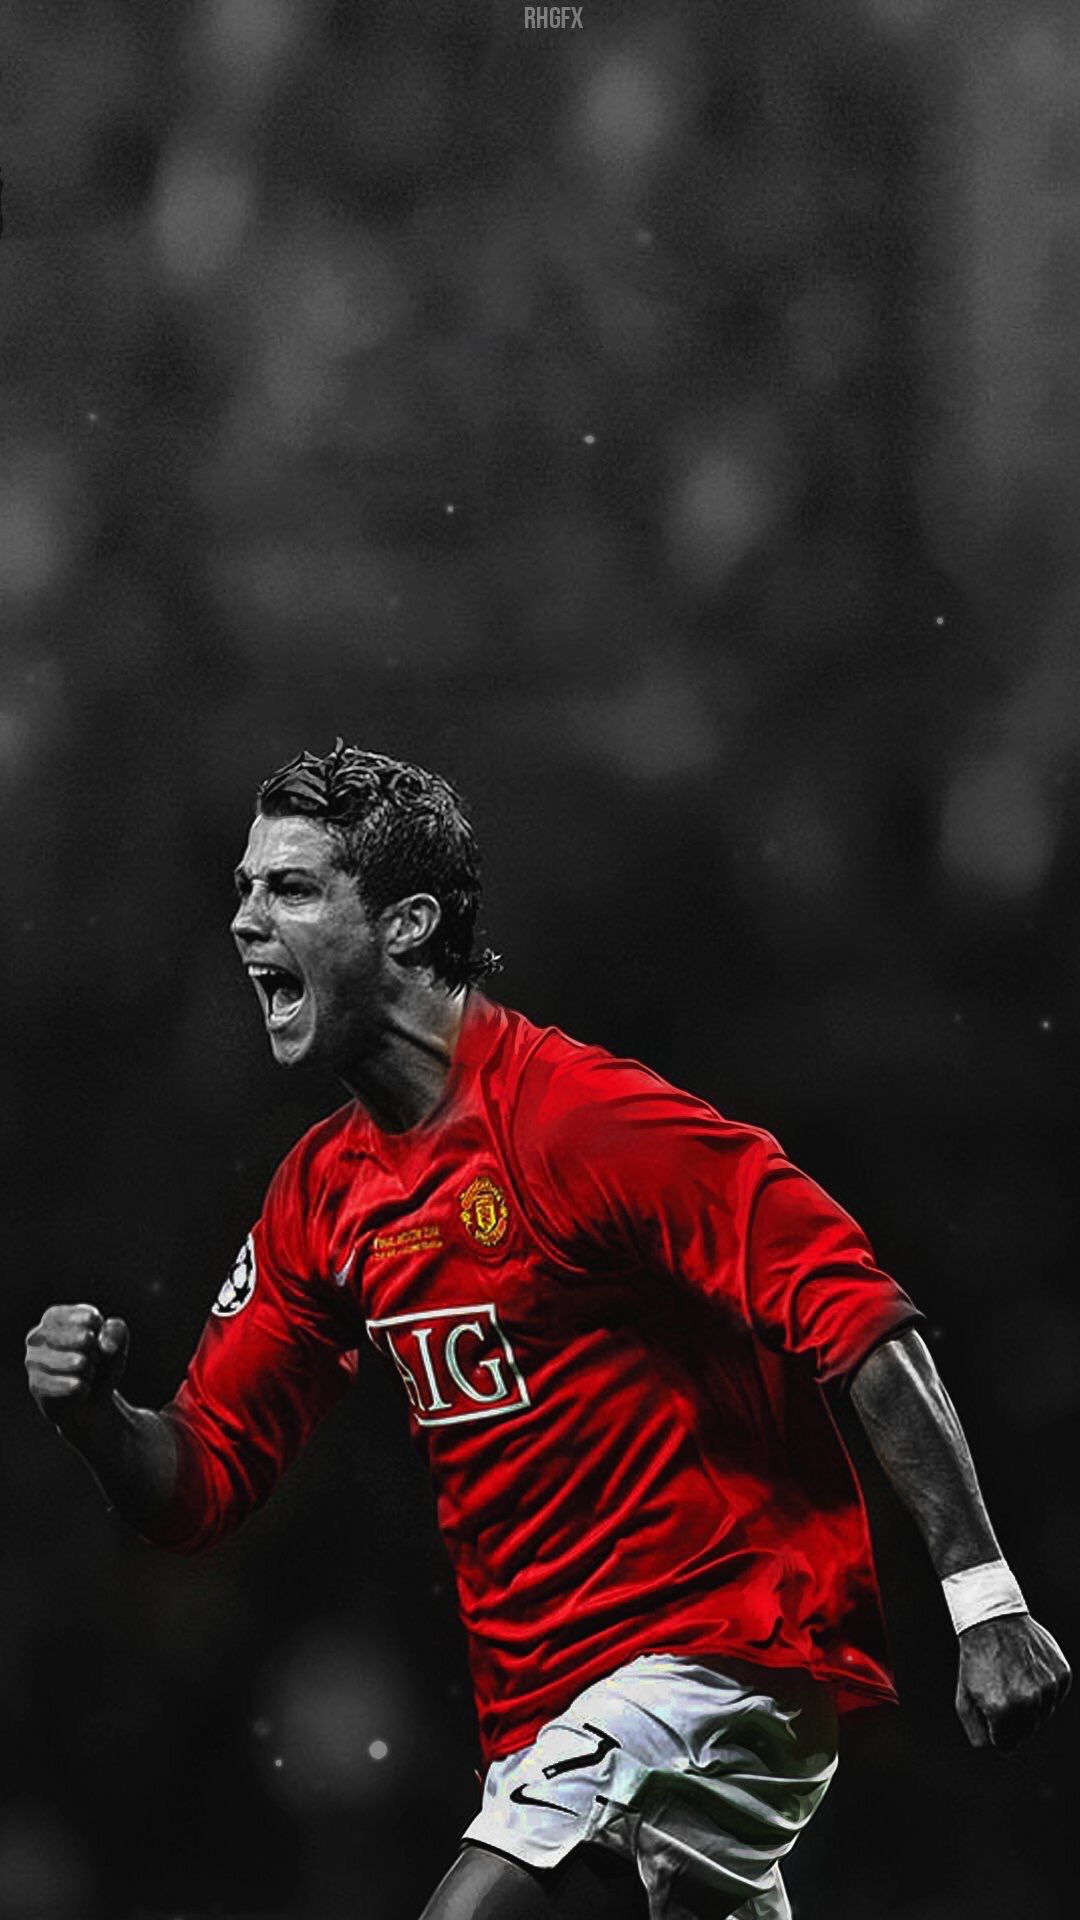 32+] Cristiano Ronaldo Manchester United Wallpapers - WallpaperSafari